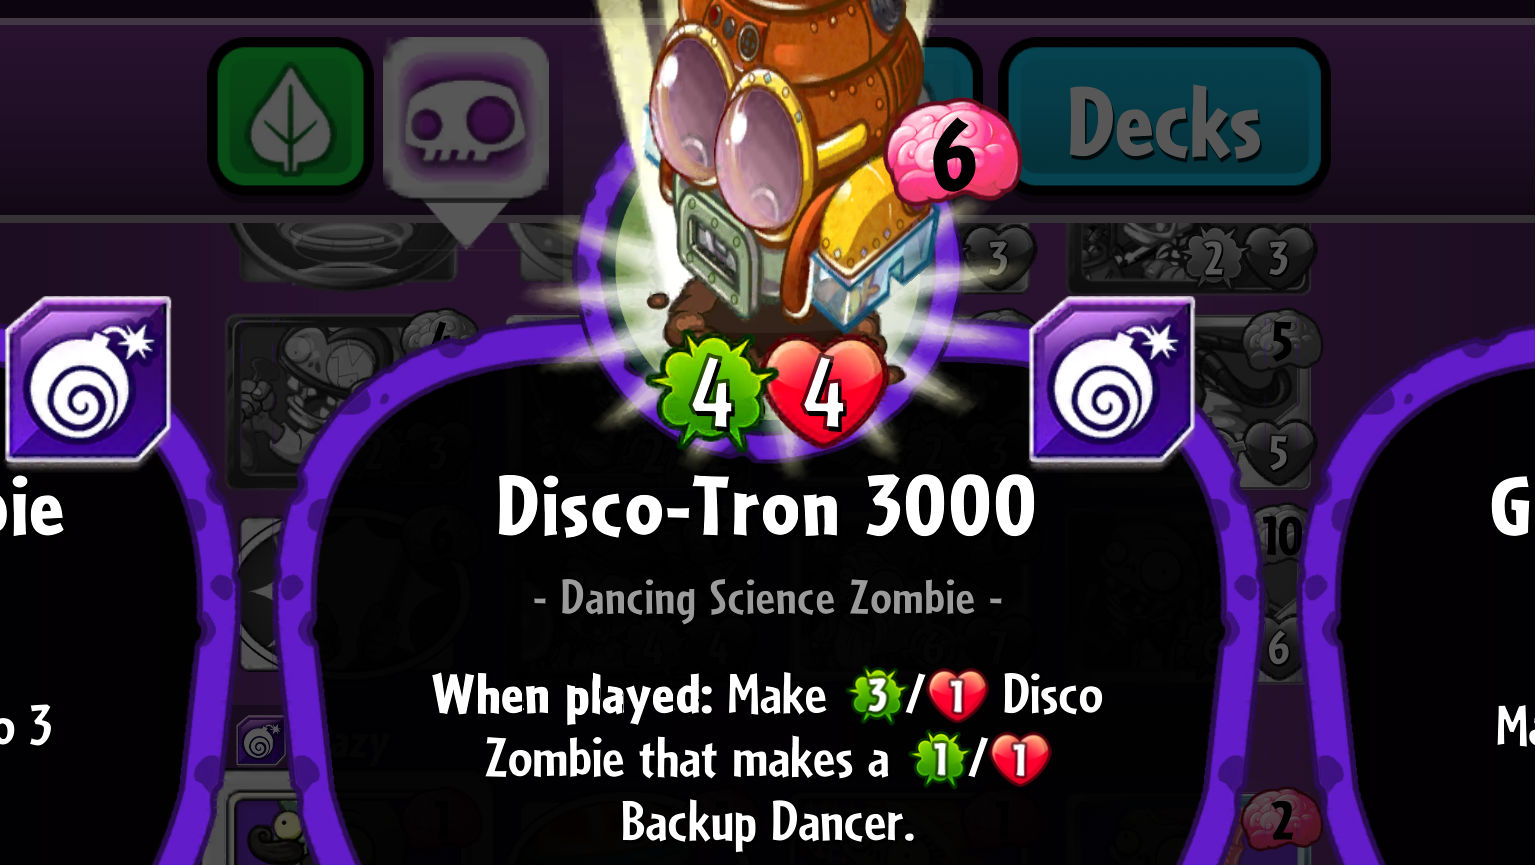 Plants vs. Zombies Disco-Tron 3000